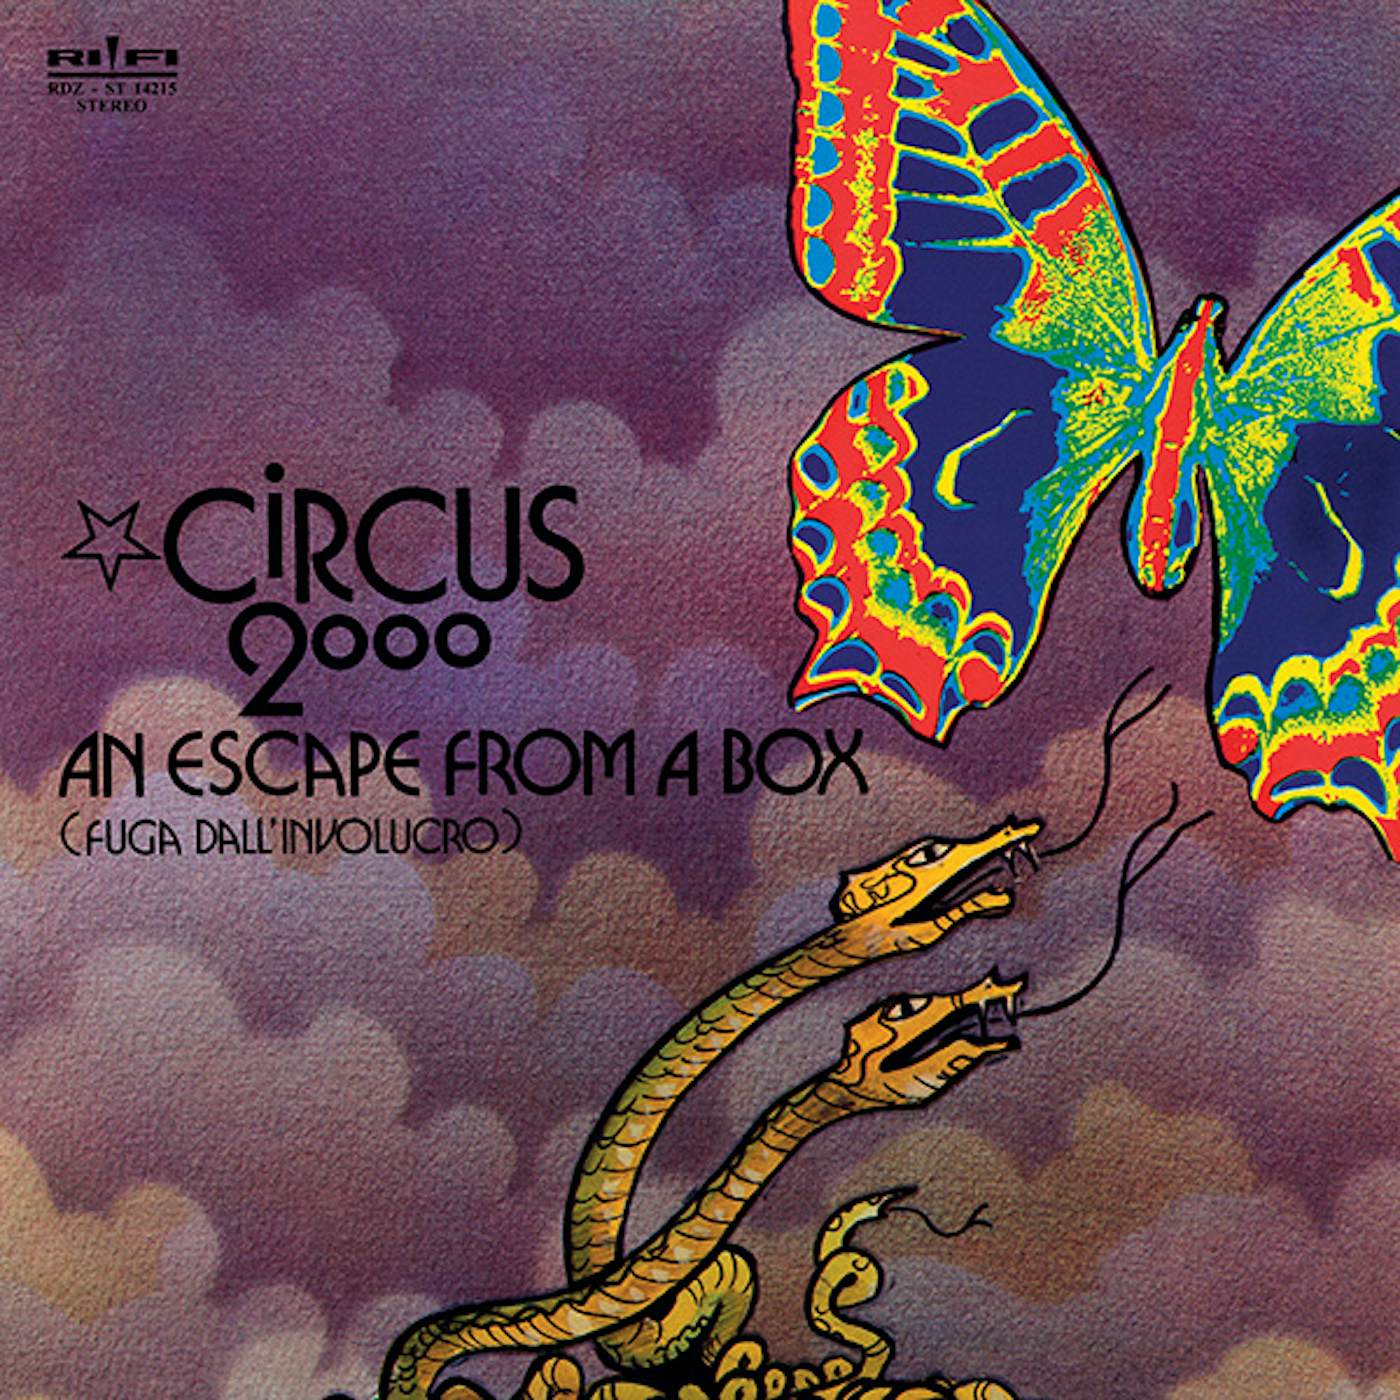 Circus 2000 ESCAPE FROM A BOX Vinyl Record